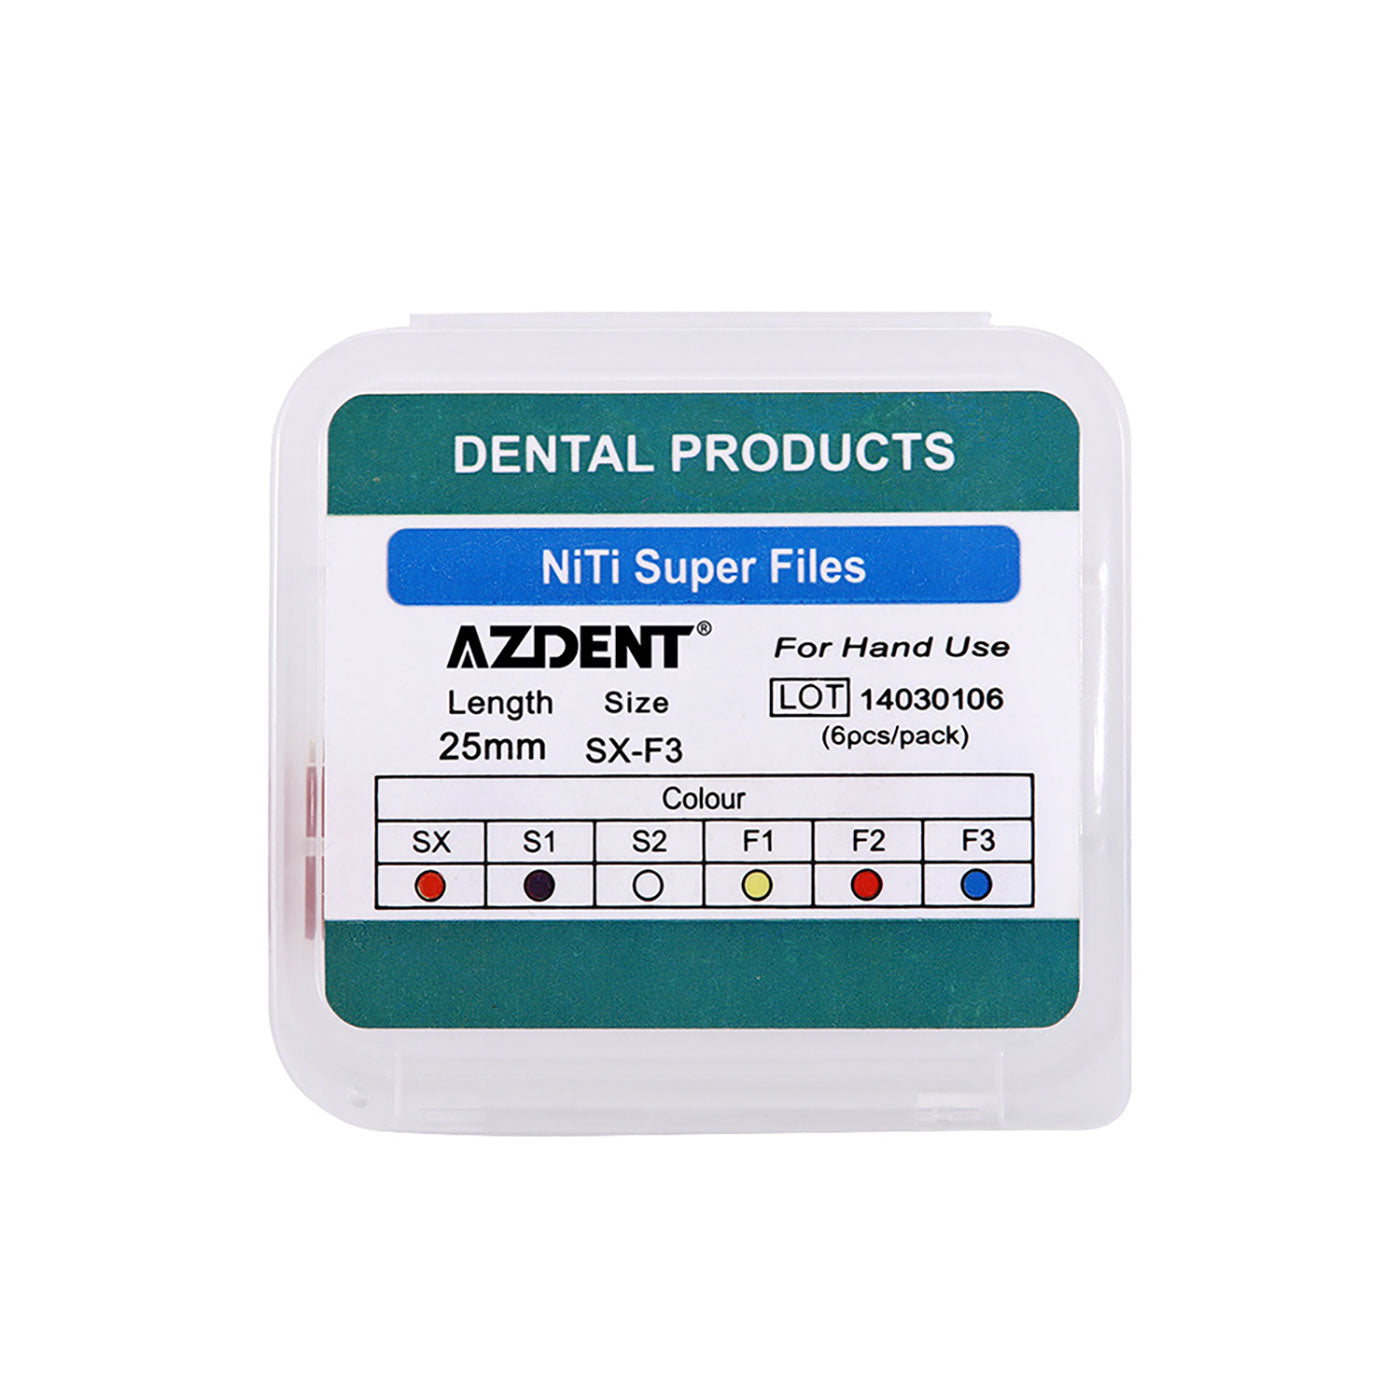 AZDENT Dental Hand NiTi Super Files Heat Activated 25mm 6Pcs/Pack - azdentall.com